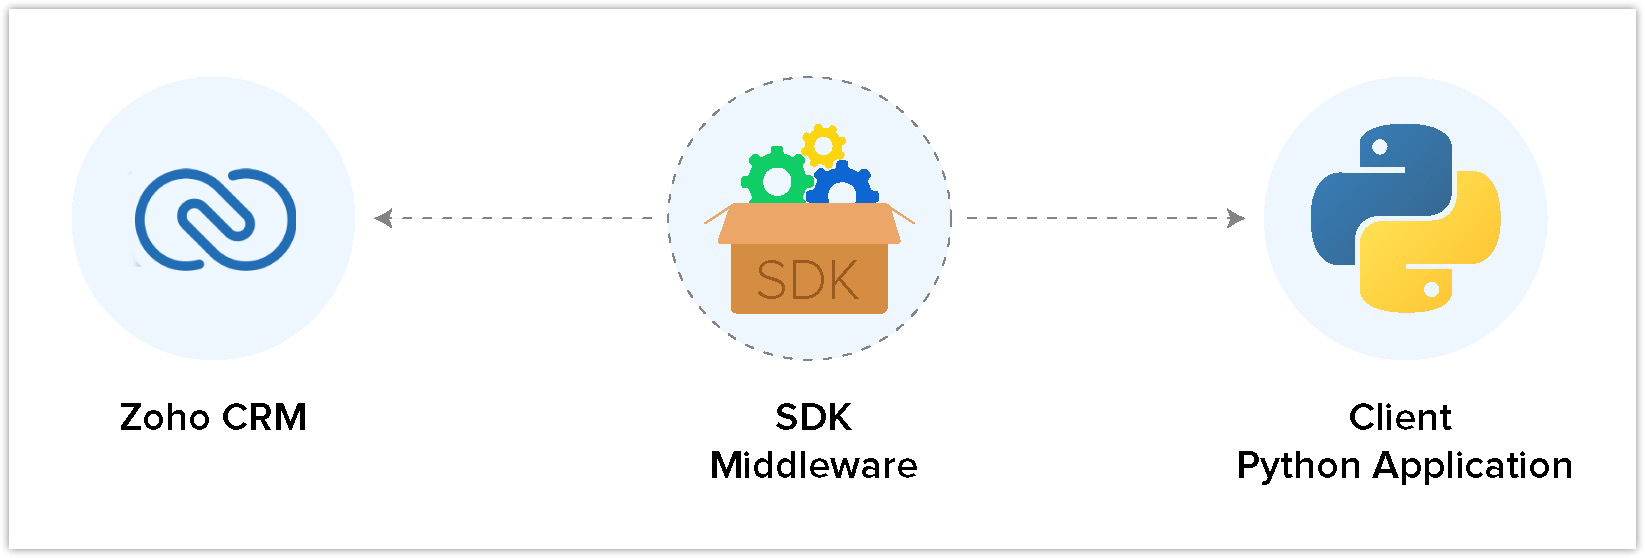 Python SDK Middleware Image